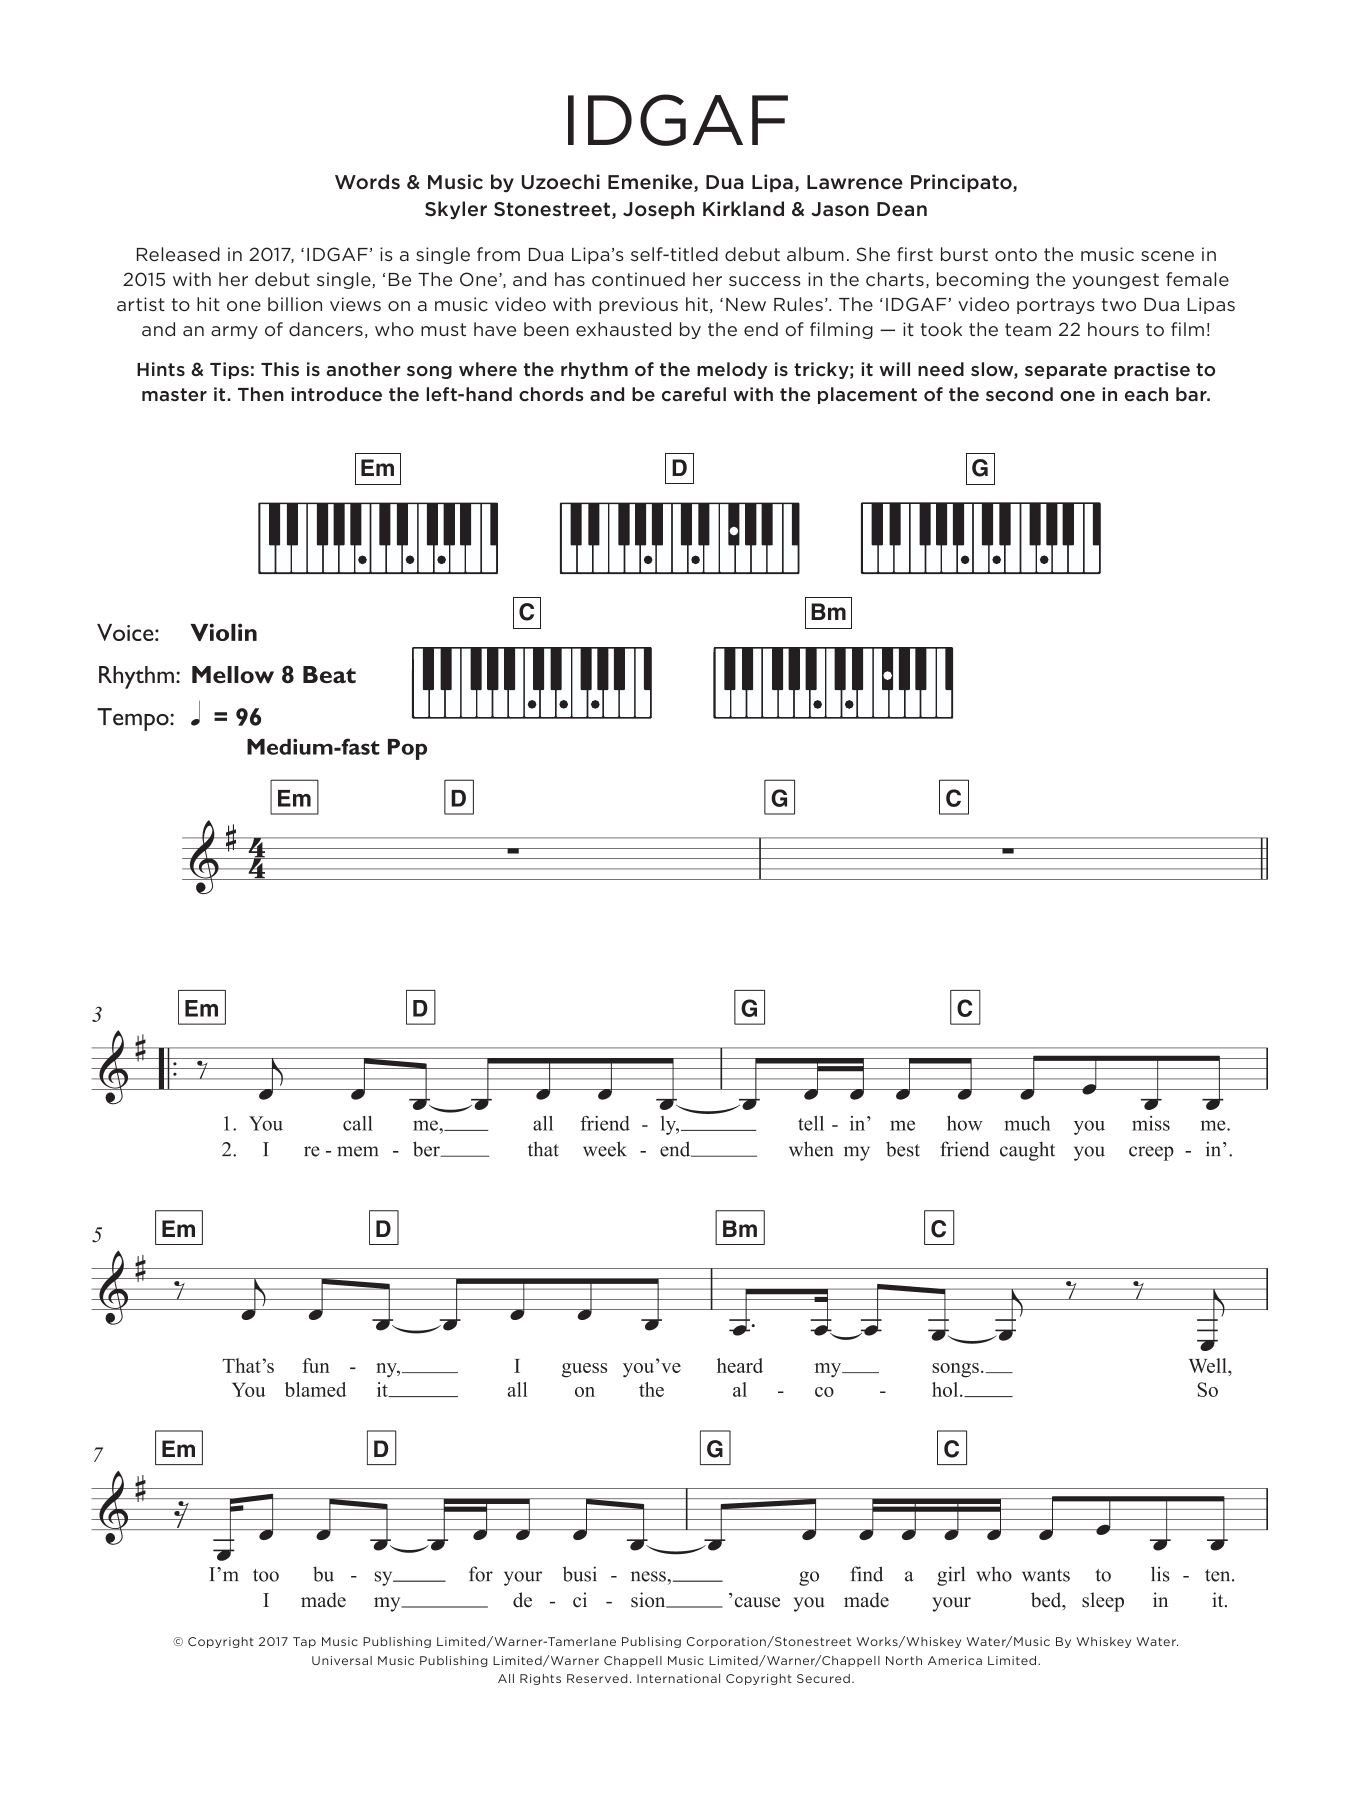 Dua Lipa IDGAF Sheet Music Notes & Chords for Piano, Vocal & Guitar (Right-Hand Melody) - Download or Print PDF